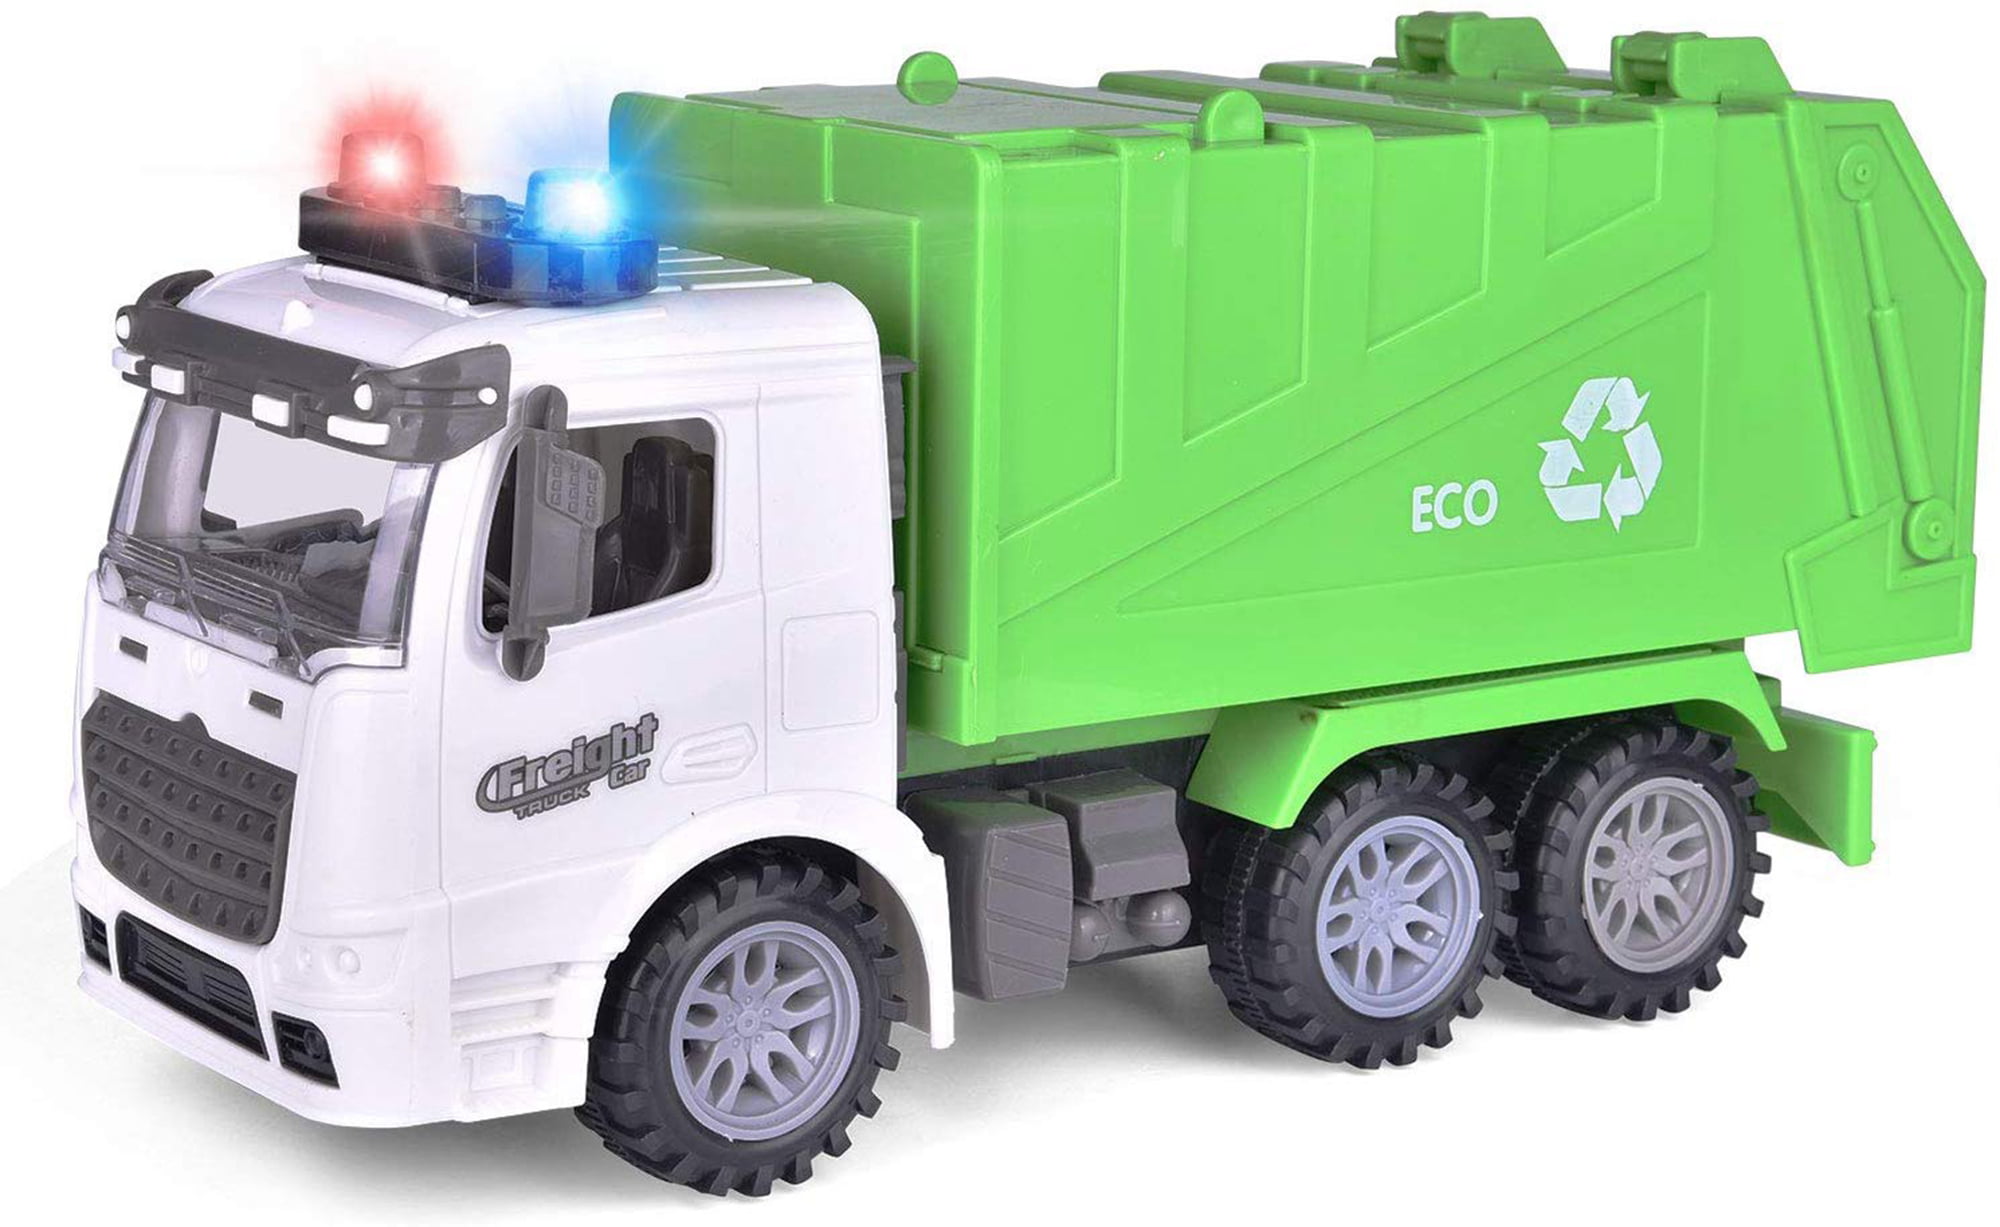 Garbage truck toys